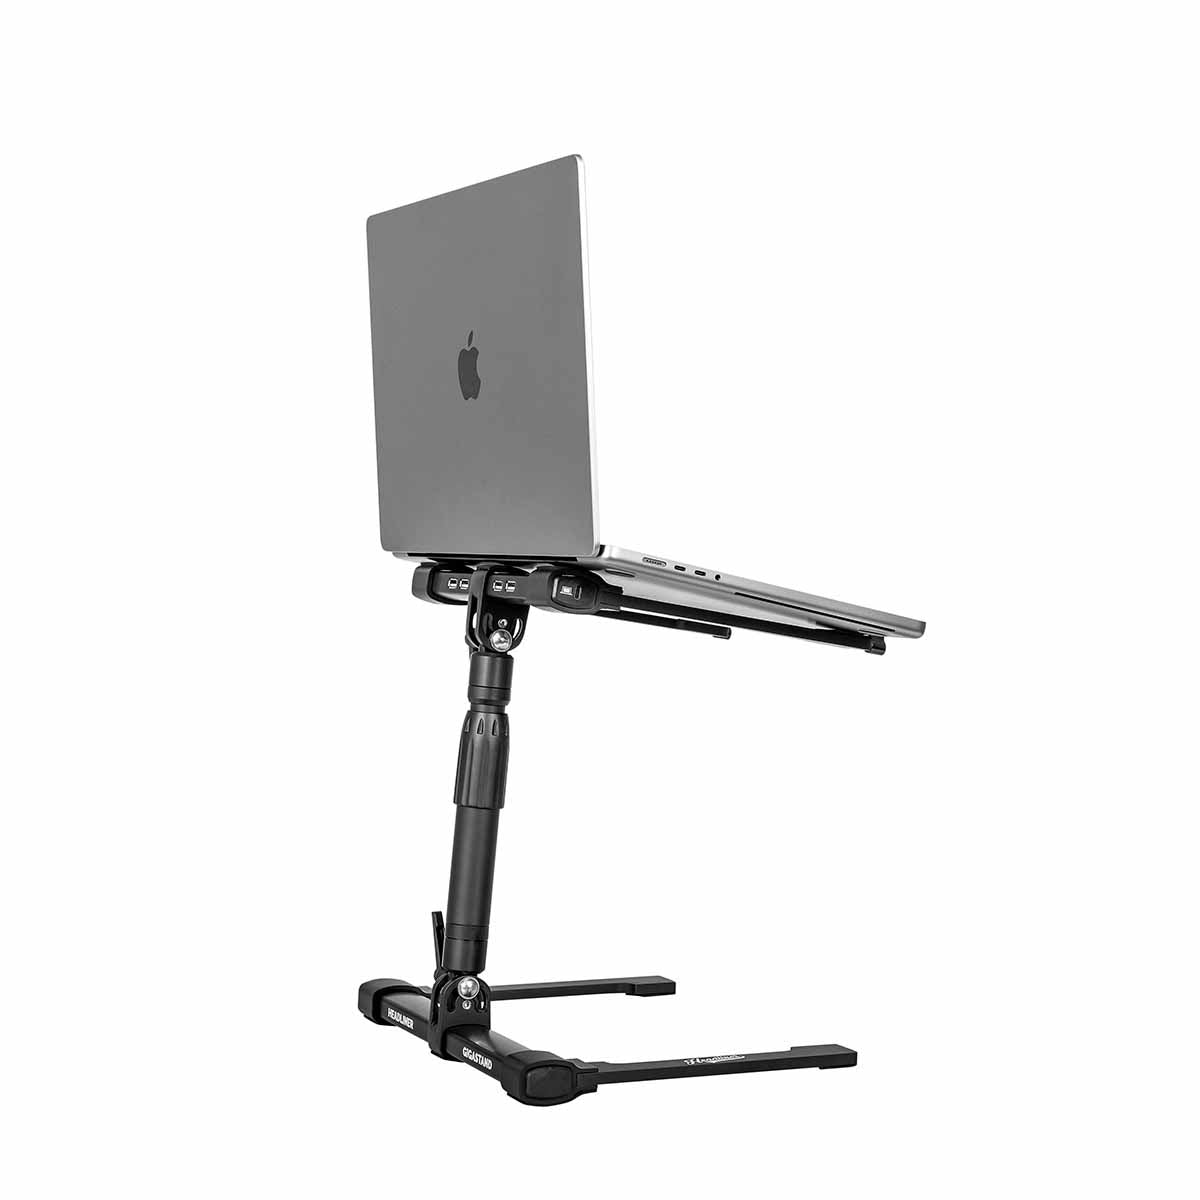 HEADLINER Gigastand USB Laptop Stand